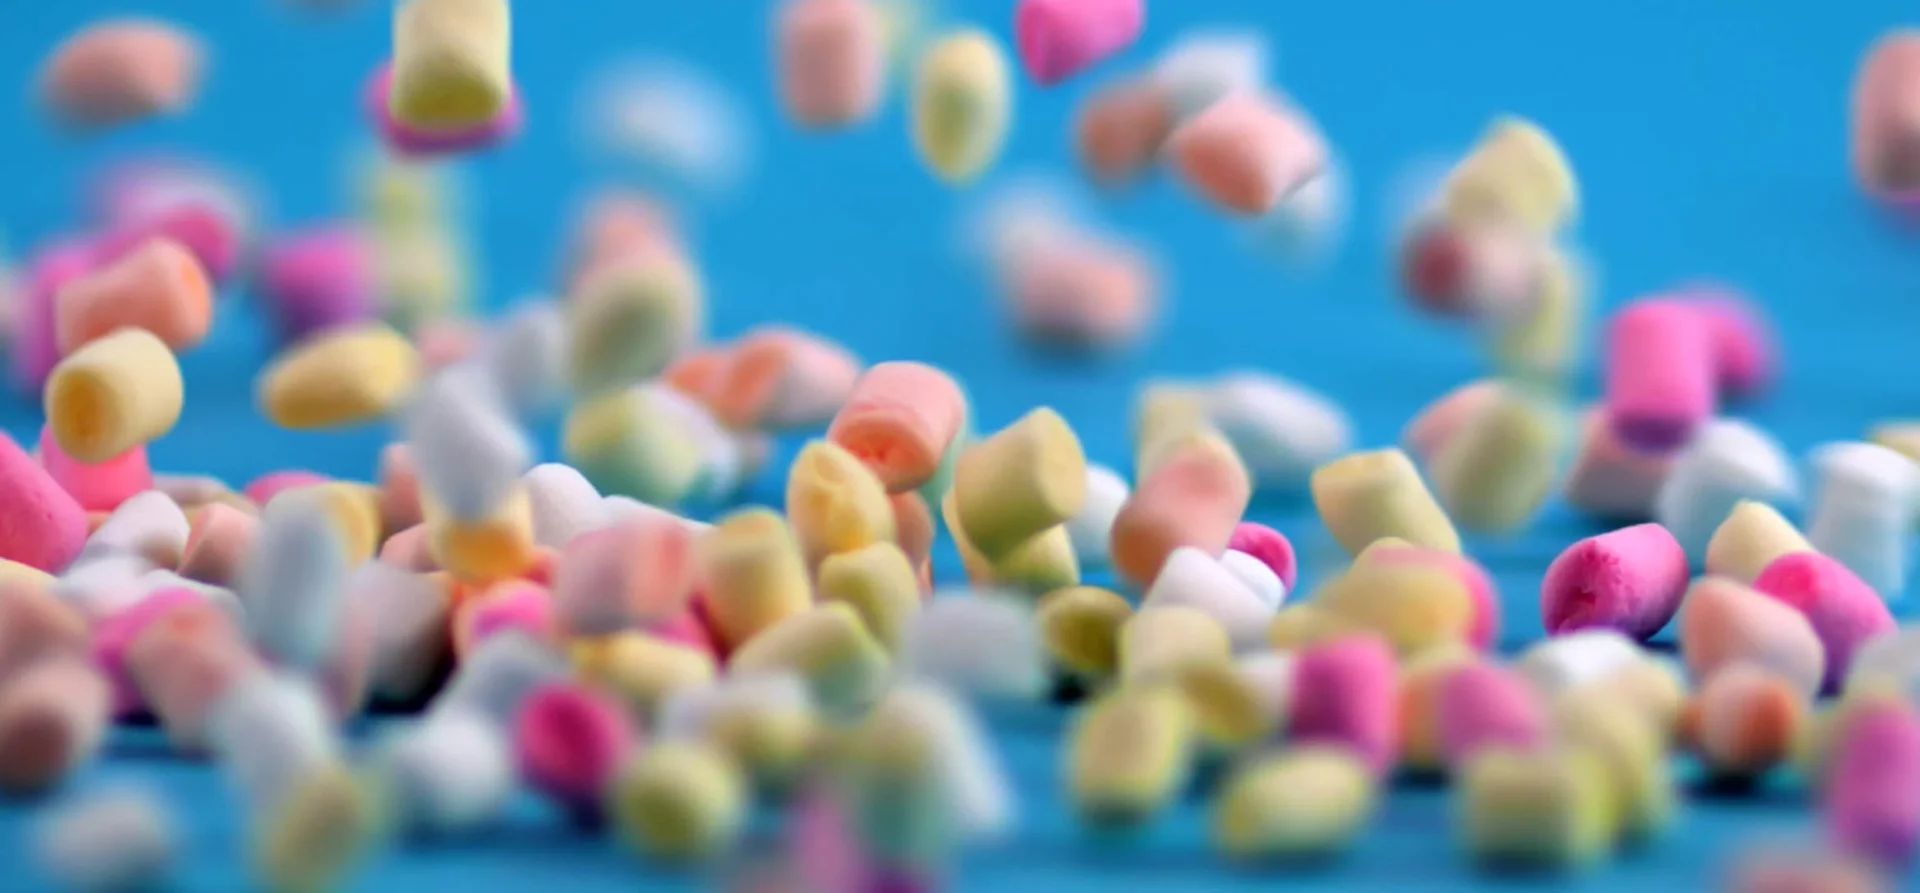 Cornland Studio - Des mini-marshmallow tombent sur un fond bleu